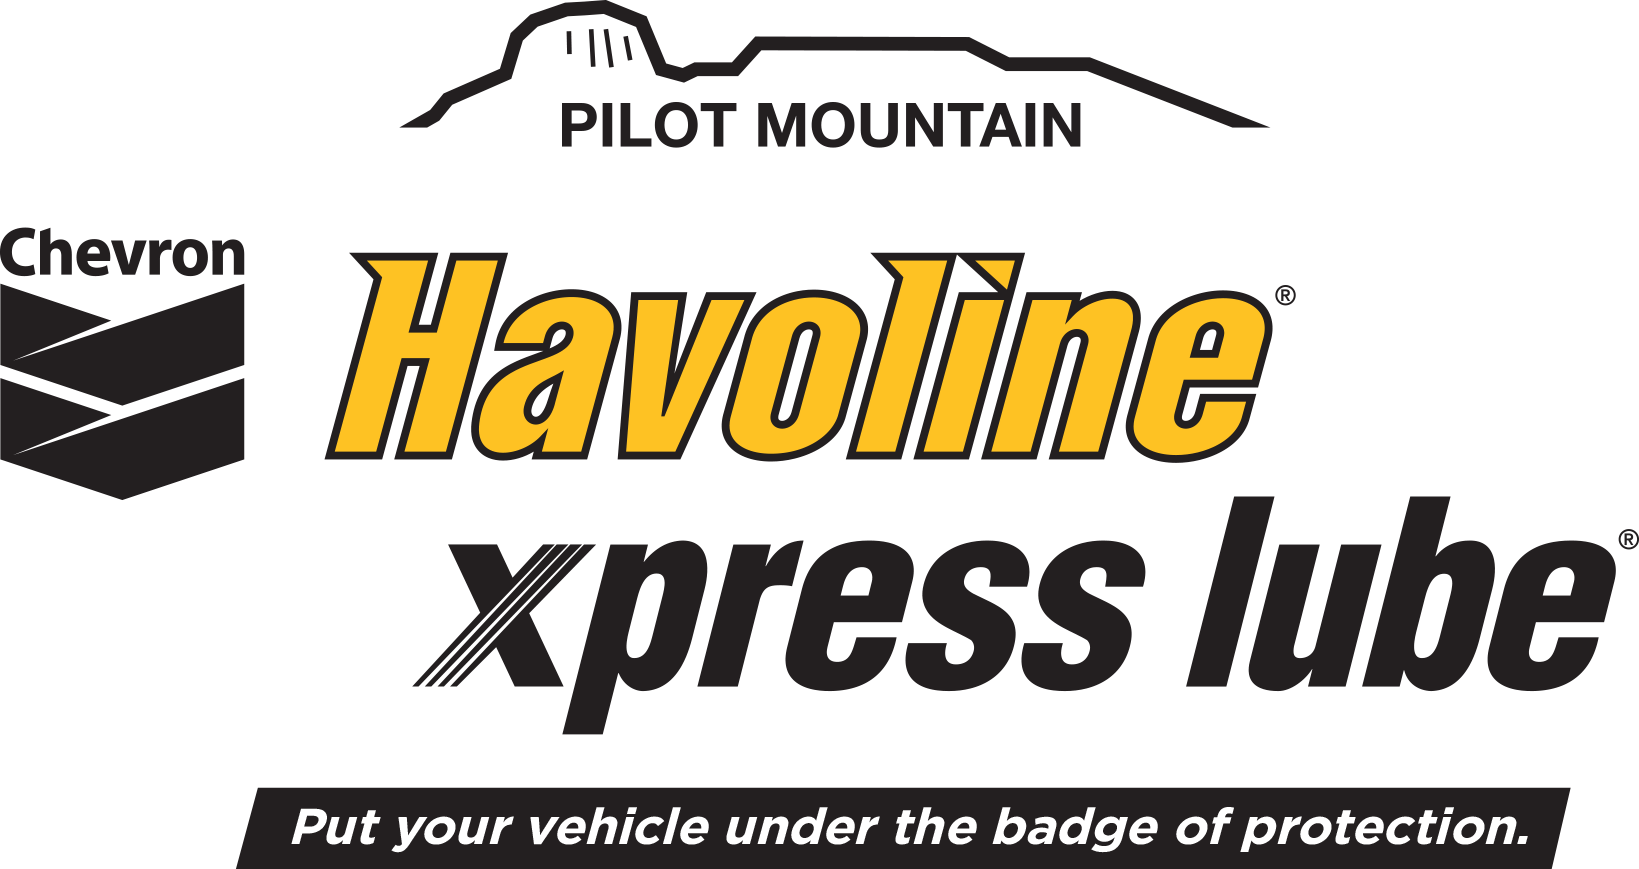 Pilot Mountain Havoline Xpress Lube in Pilot Mountain, NC